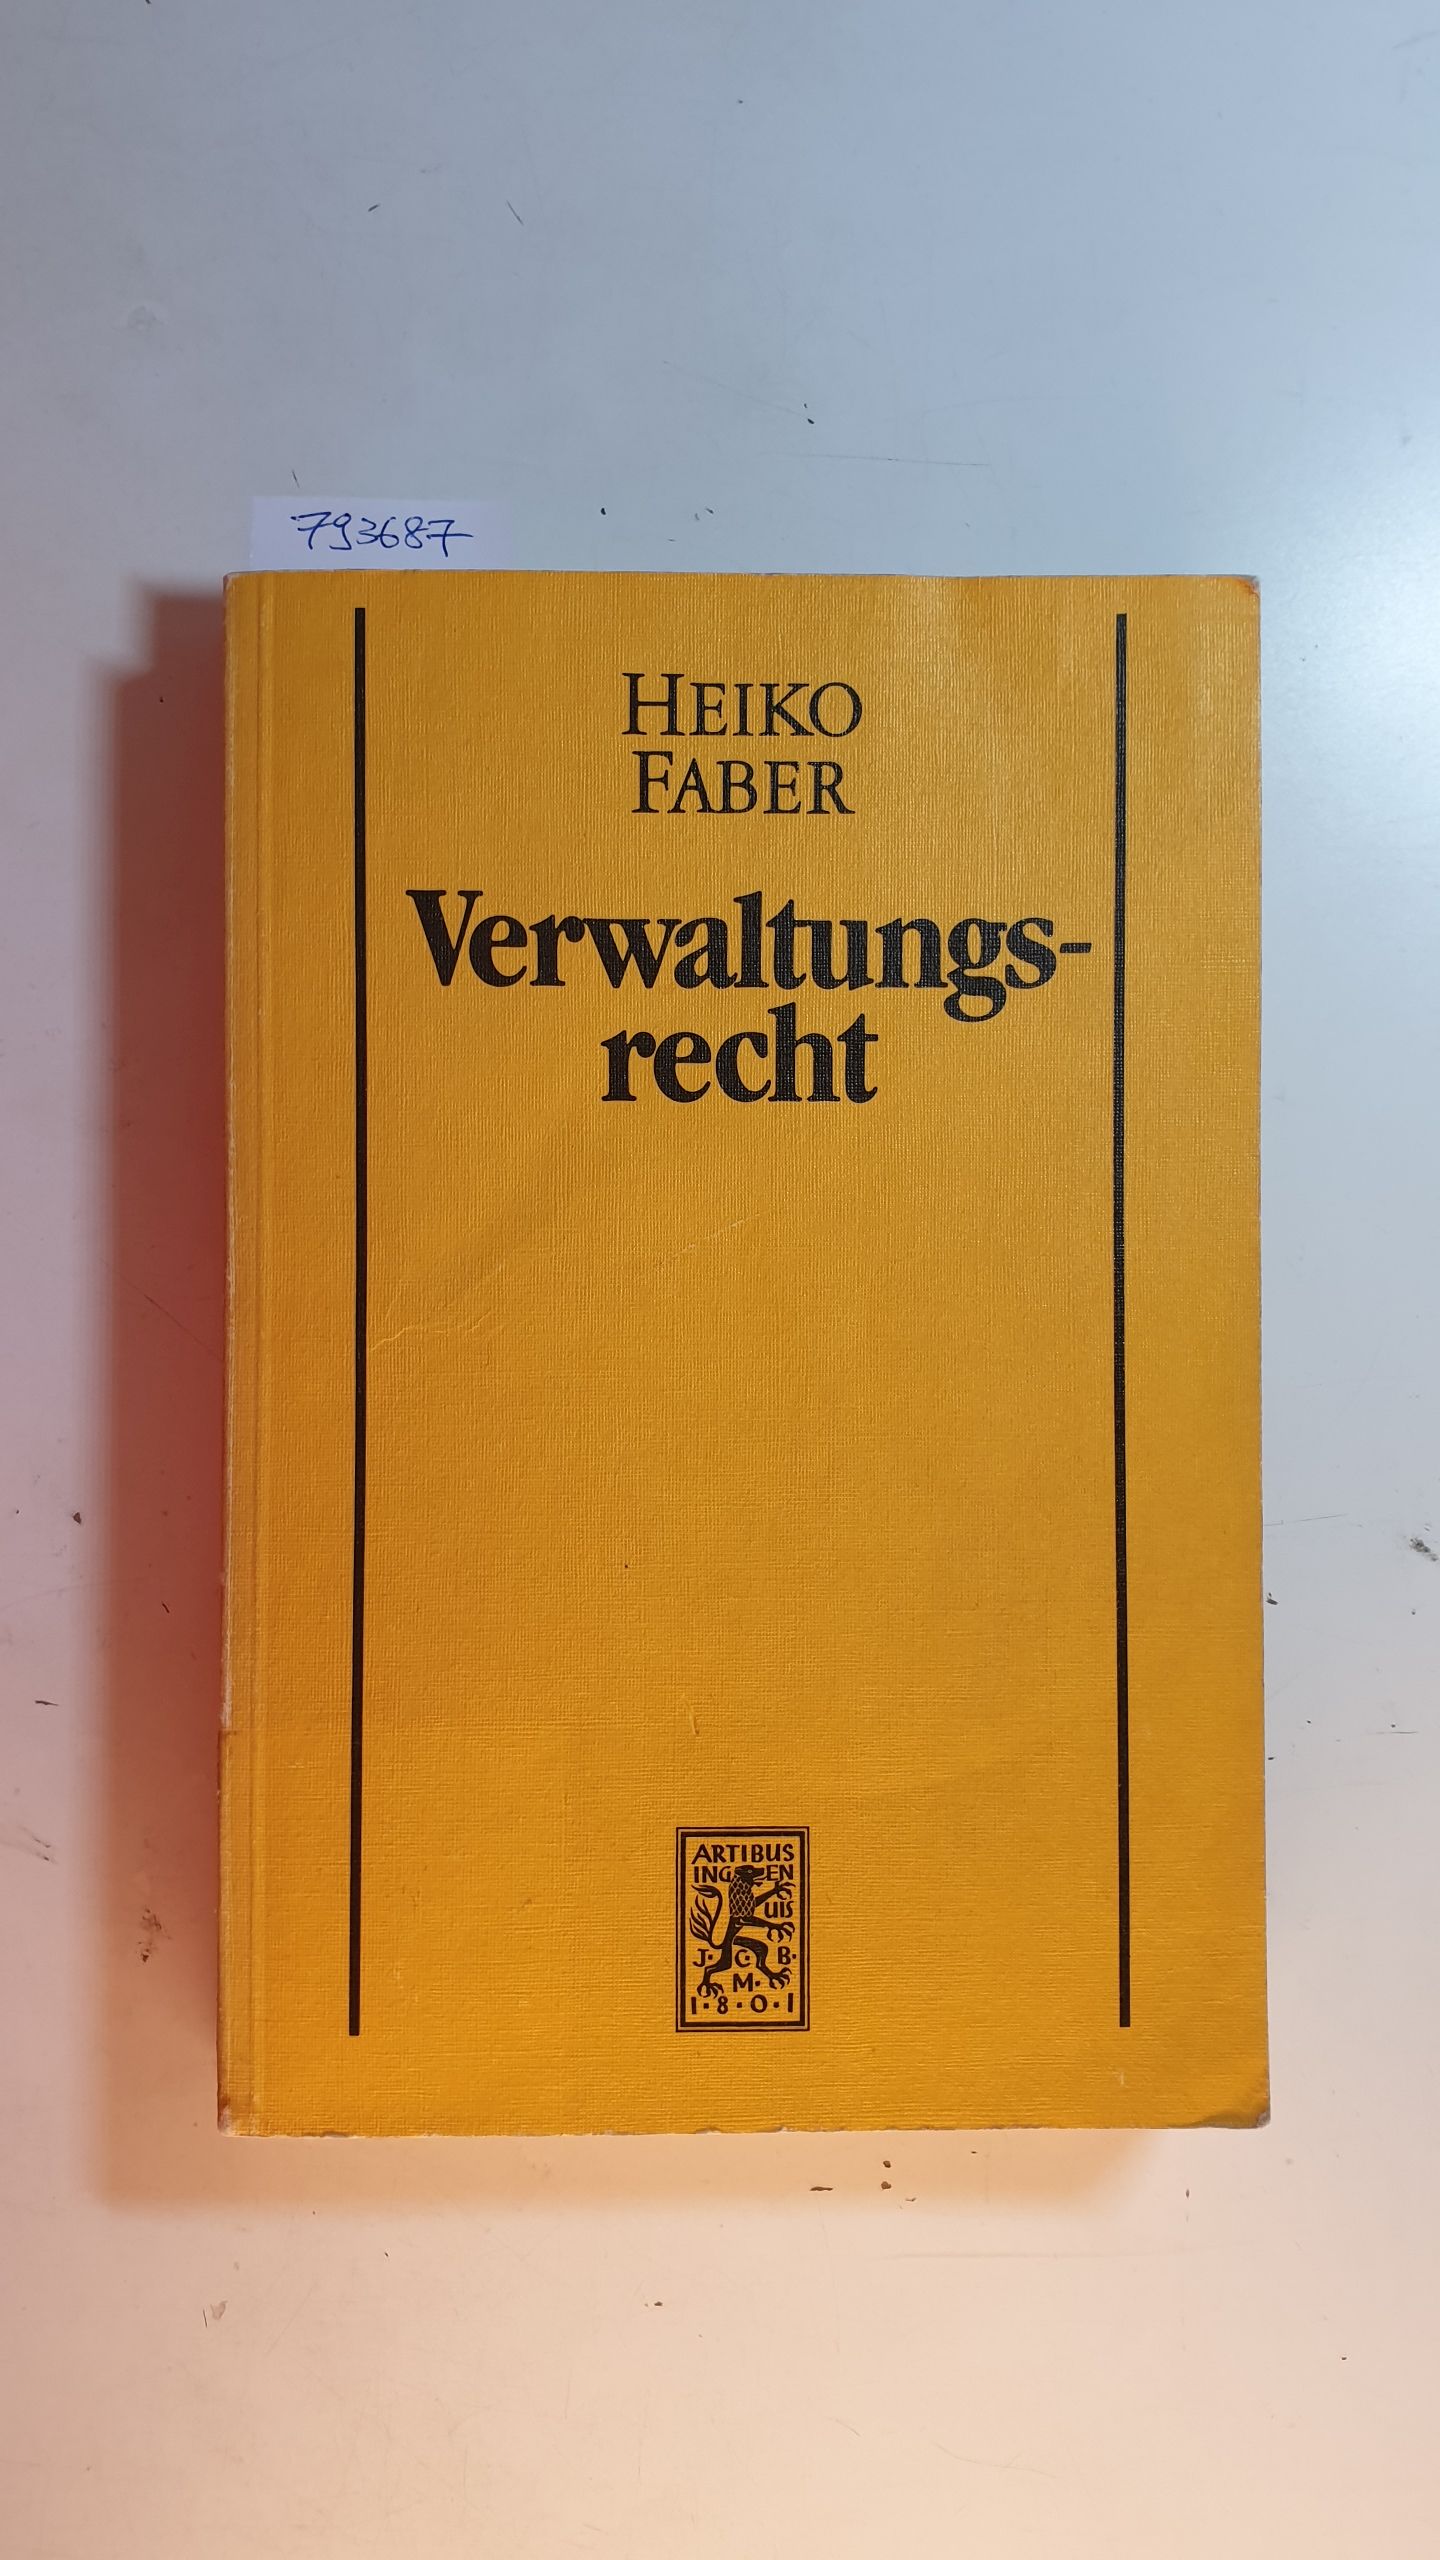 Verwaltungsrecht - Faber, Heiko